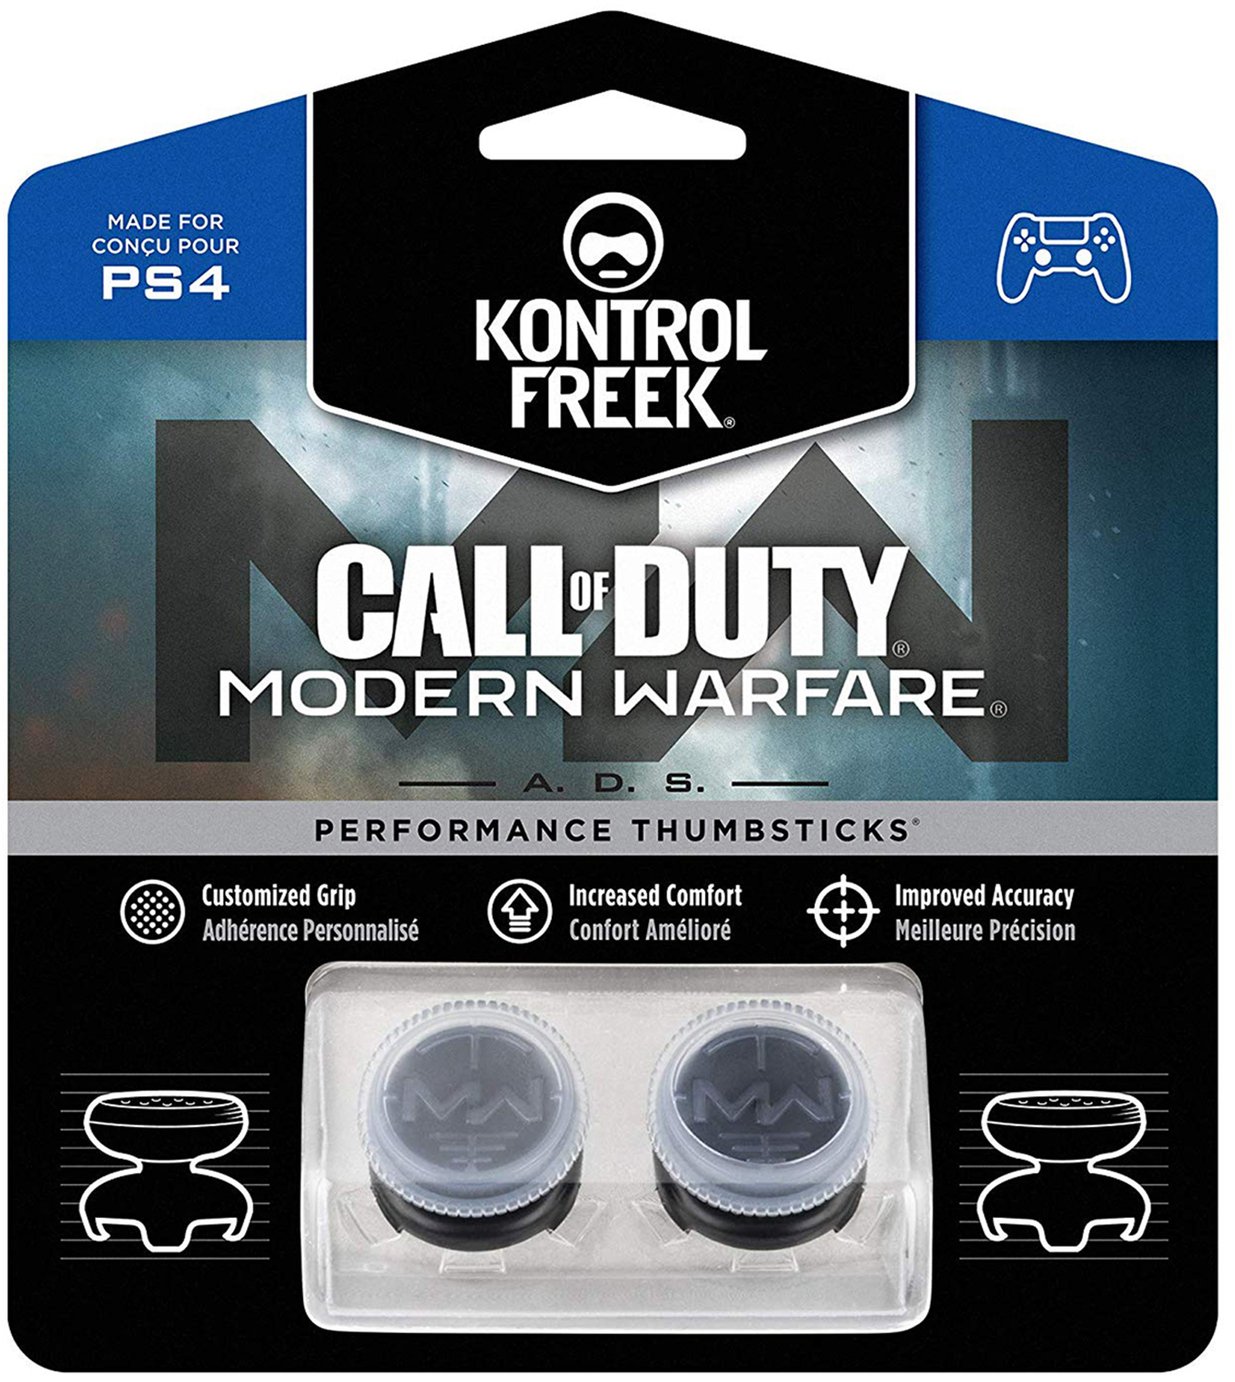 Call Of Duty : Modern Warfare PS4 Performance Thumbsticks